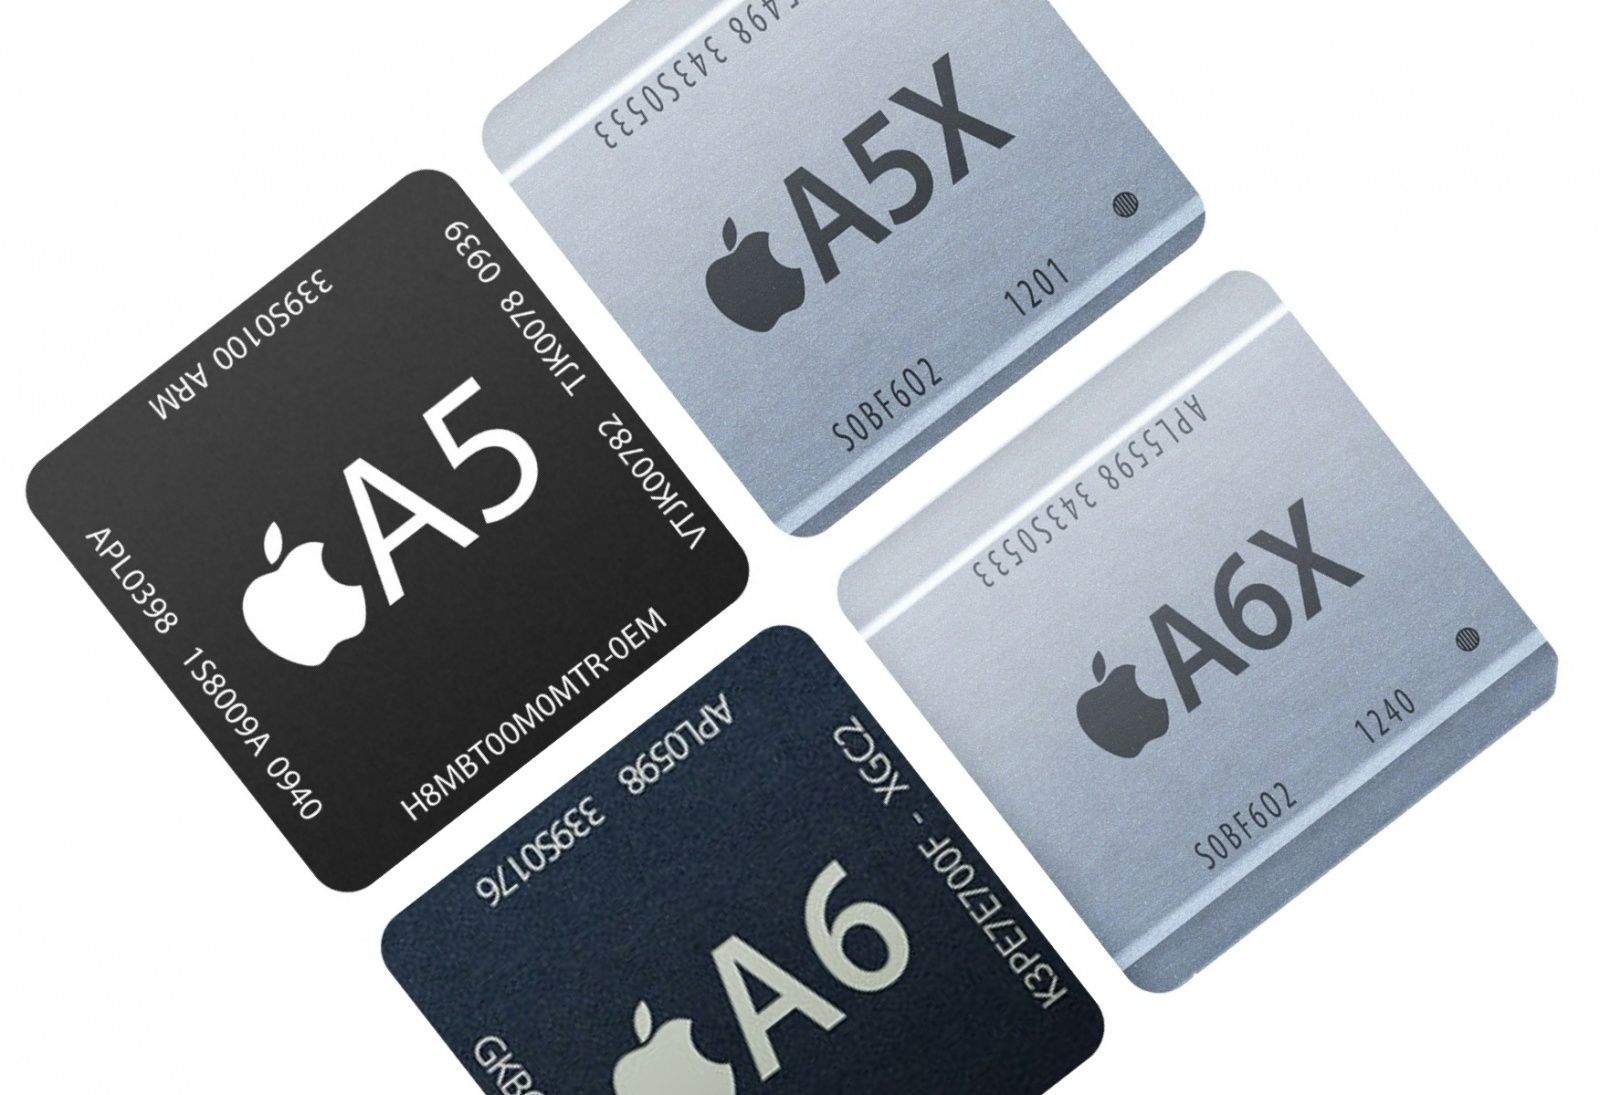 Apple-A-processors